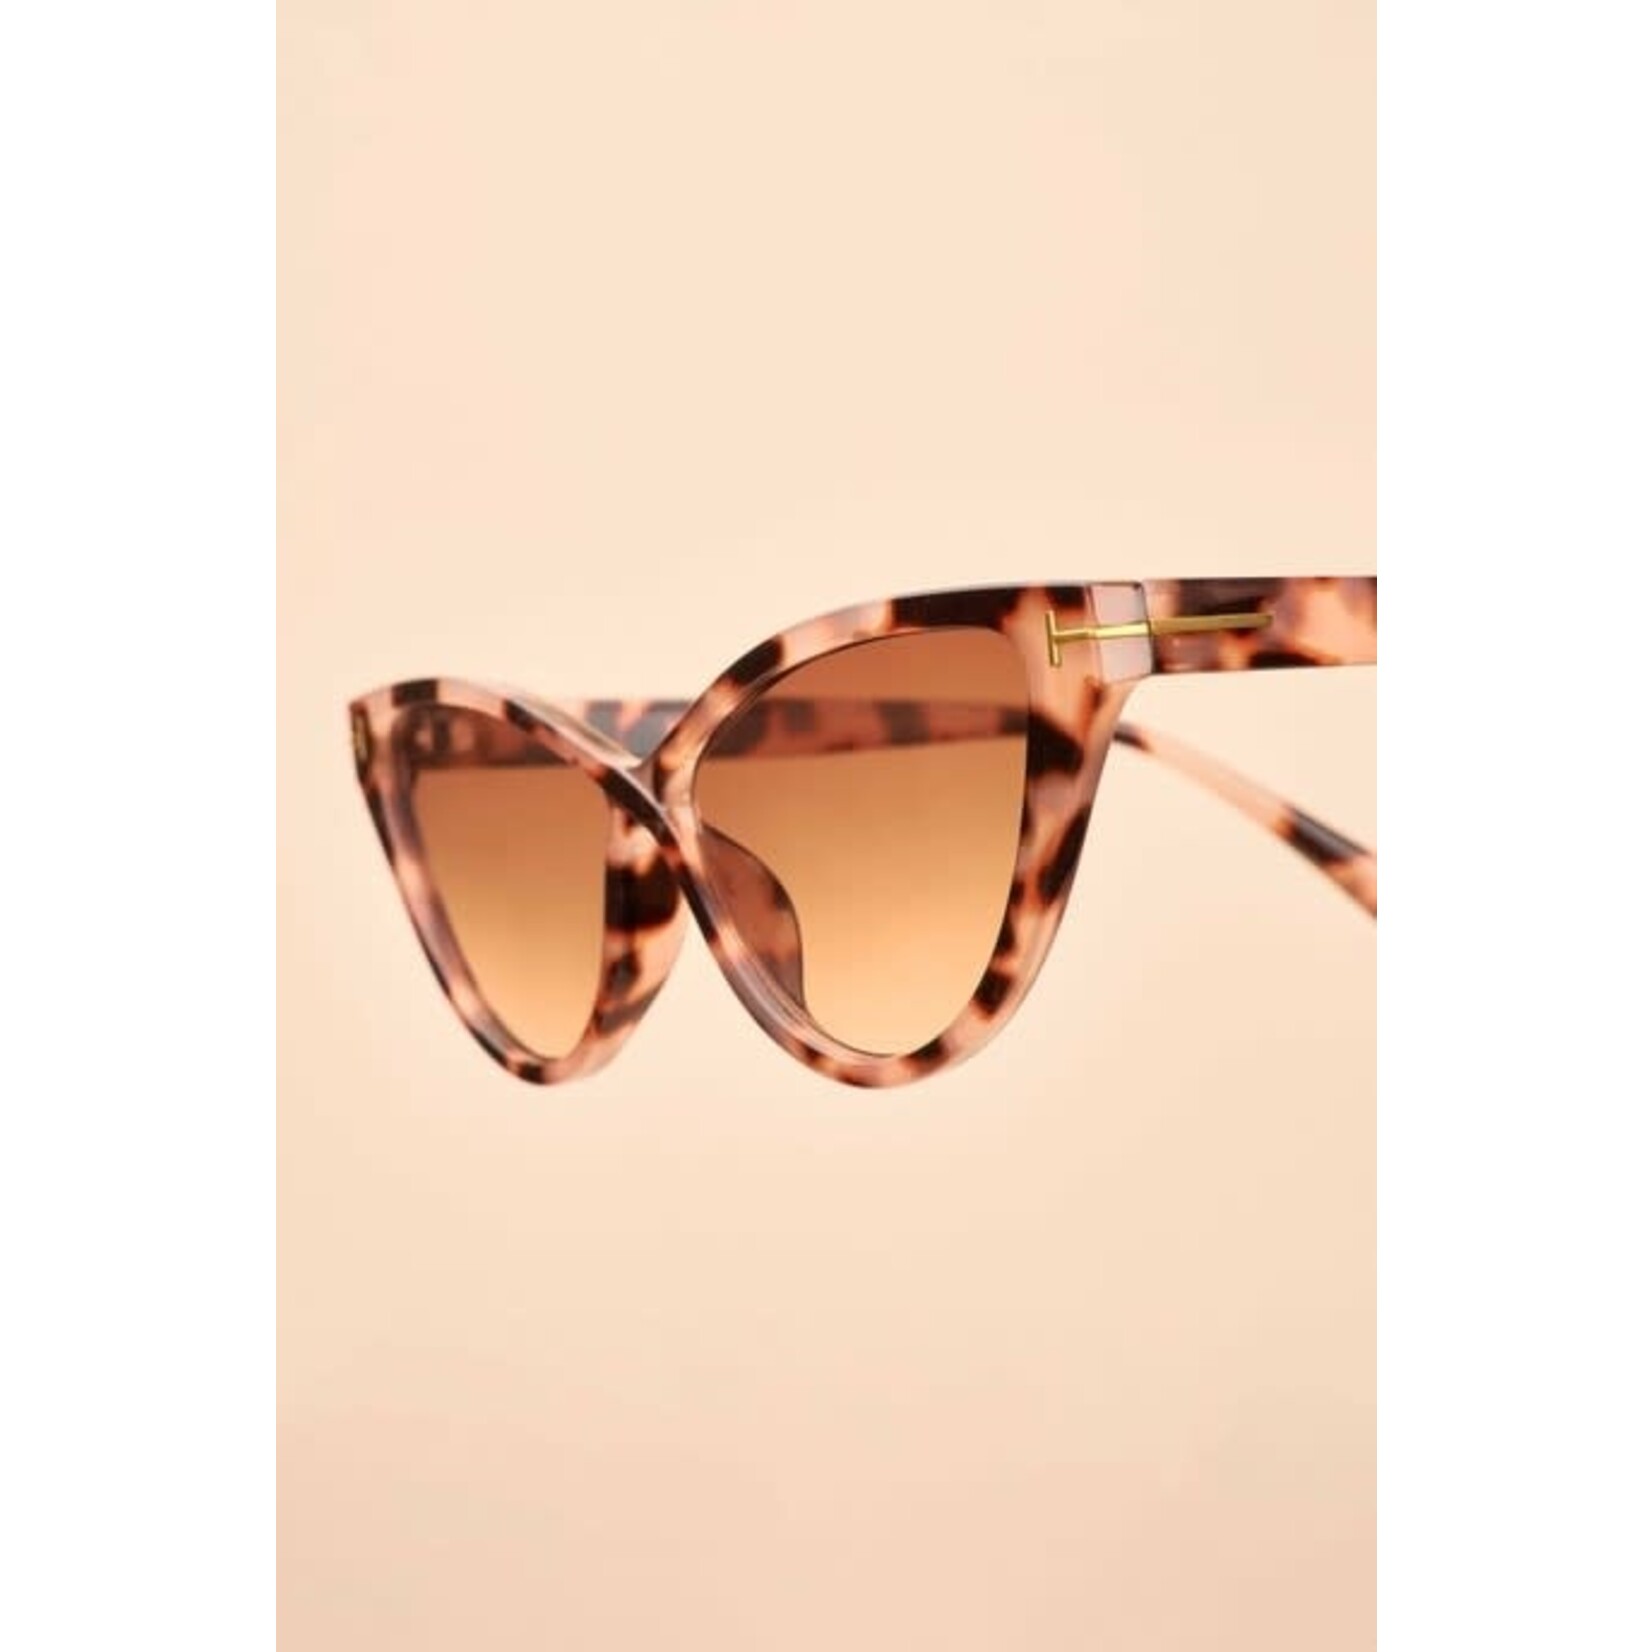 Powder Annika Limited Edition Sunglasses in Tortoiseshell